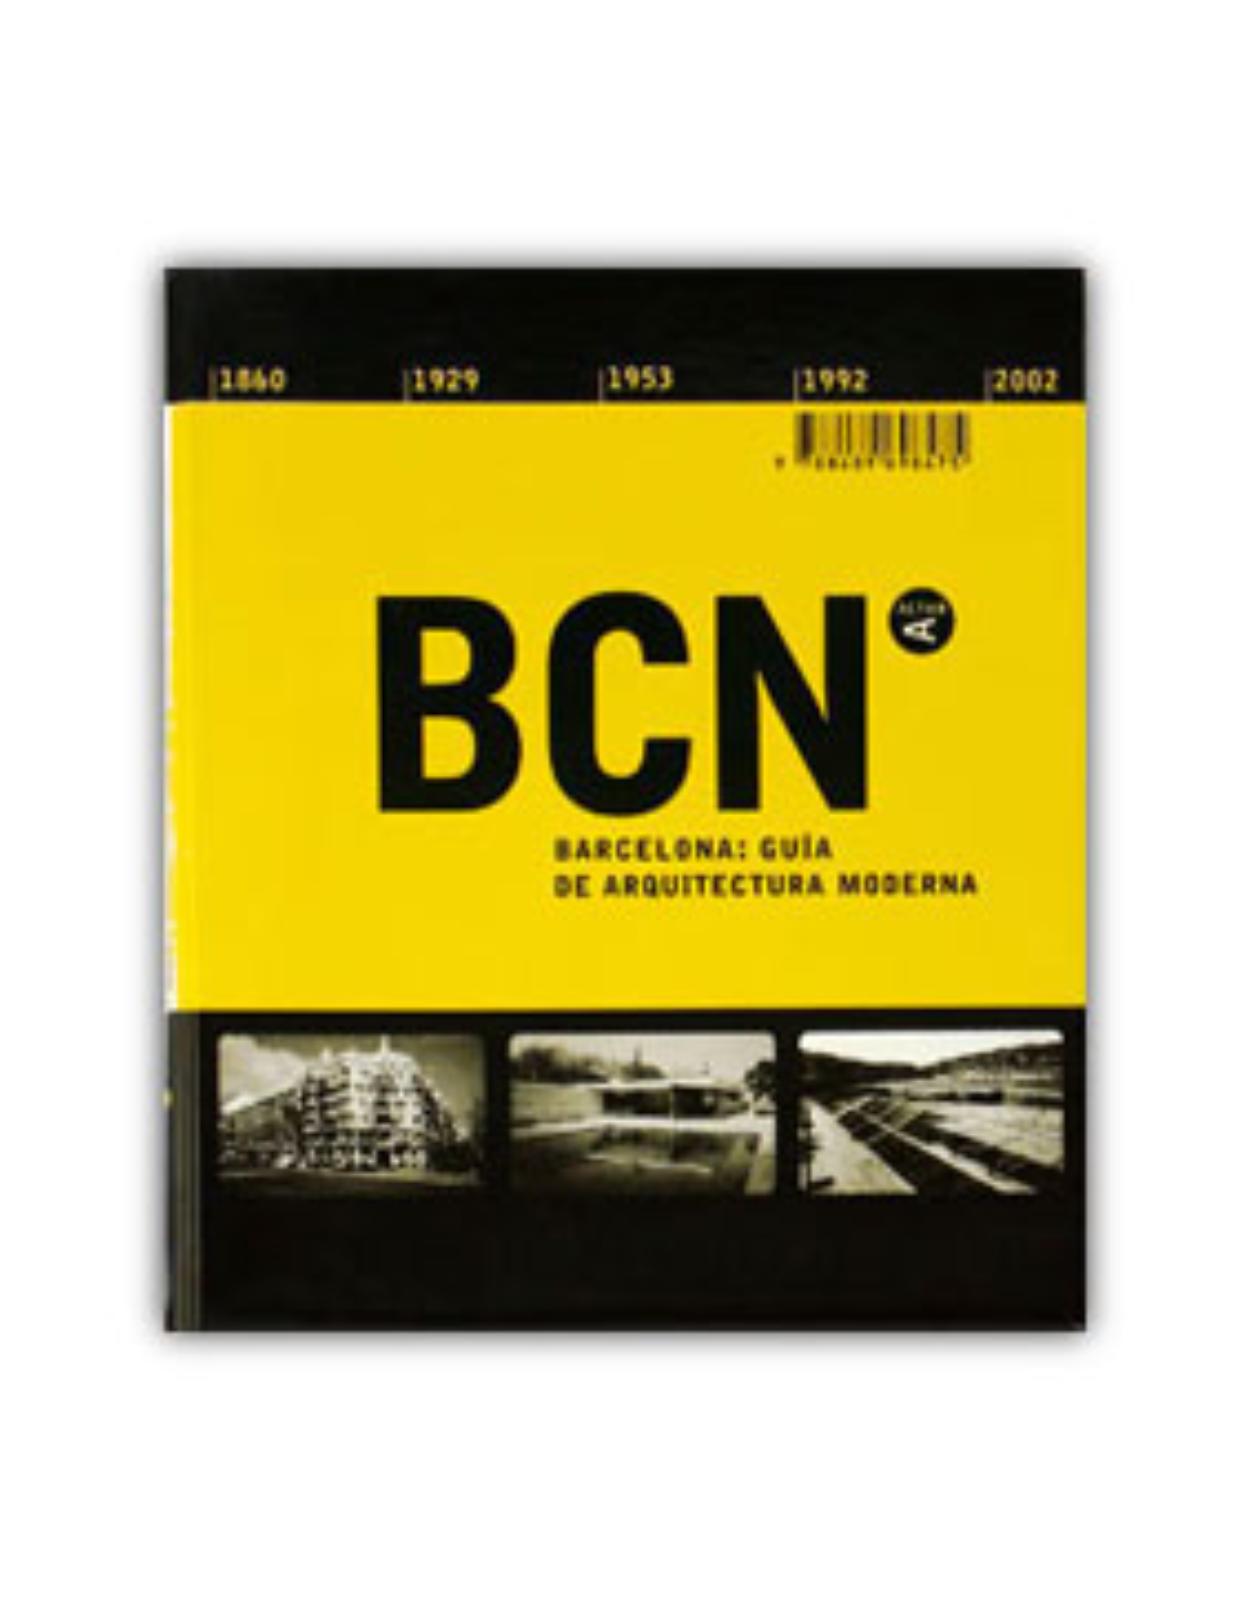 Architecture Guide to Barcelona 1860-2002